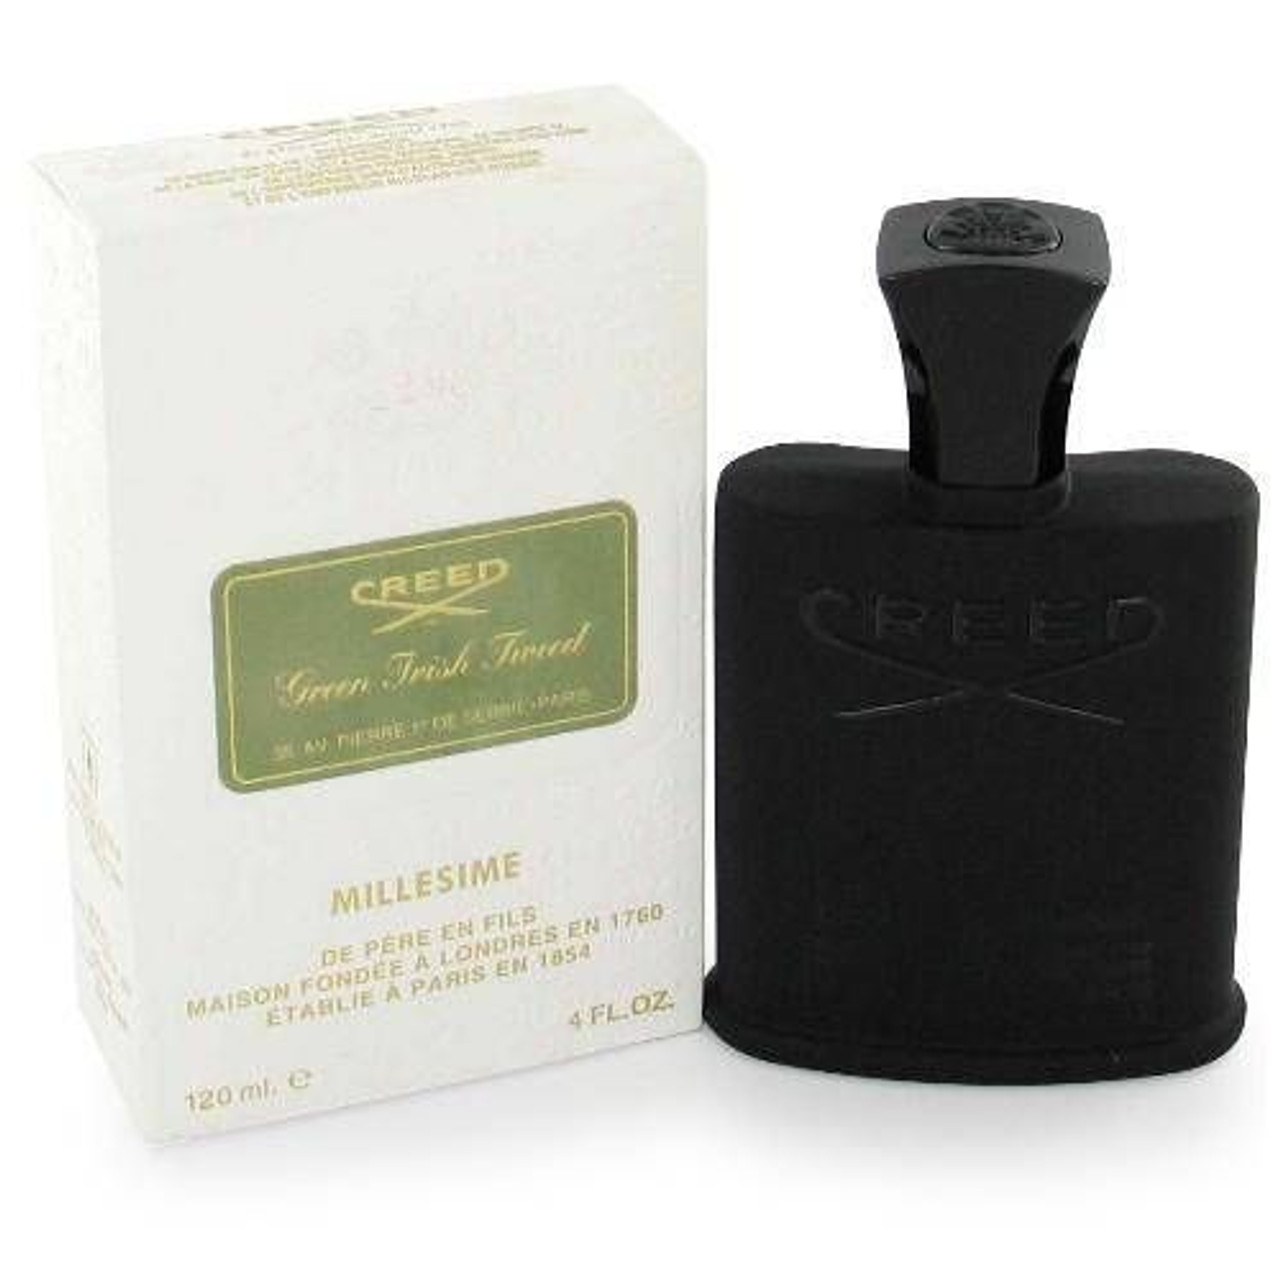 Creed Aventus Eau De Parfum Spray, Cologne for Men, 4 Oz 